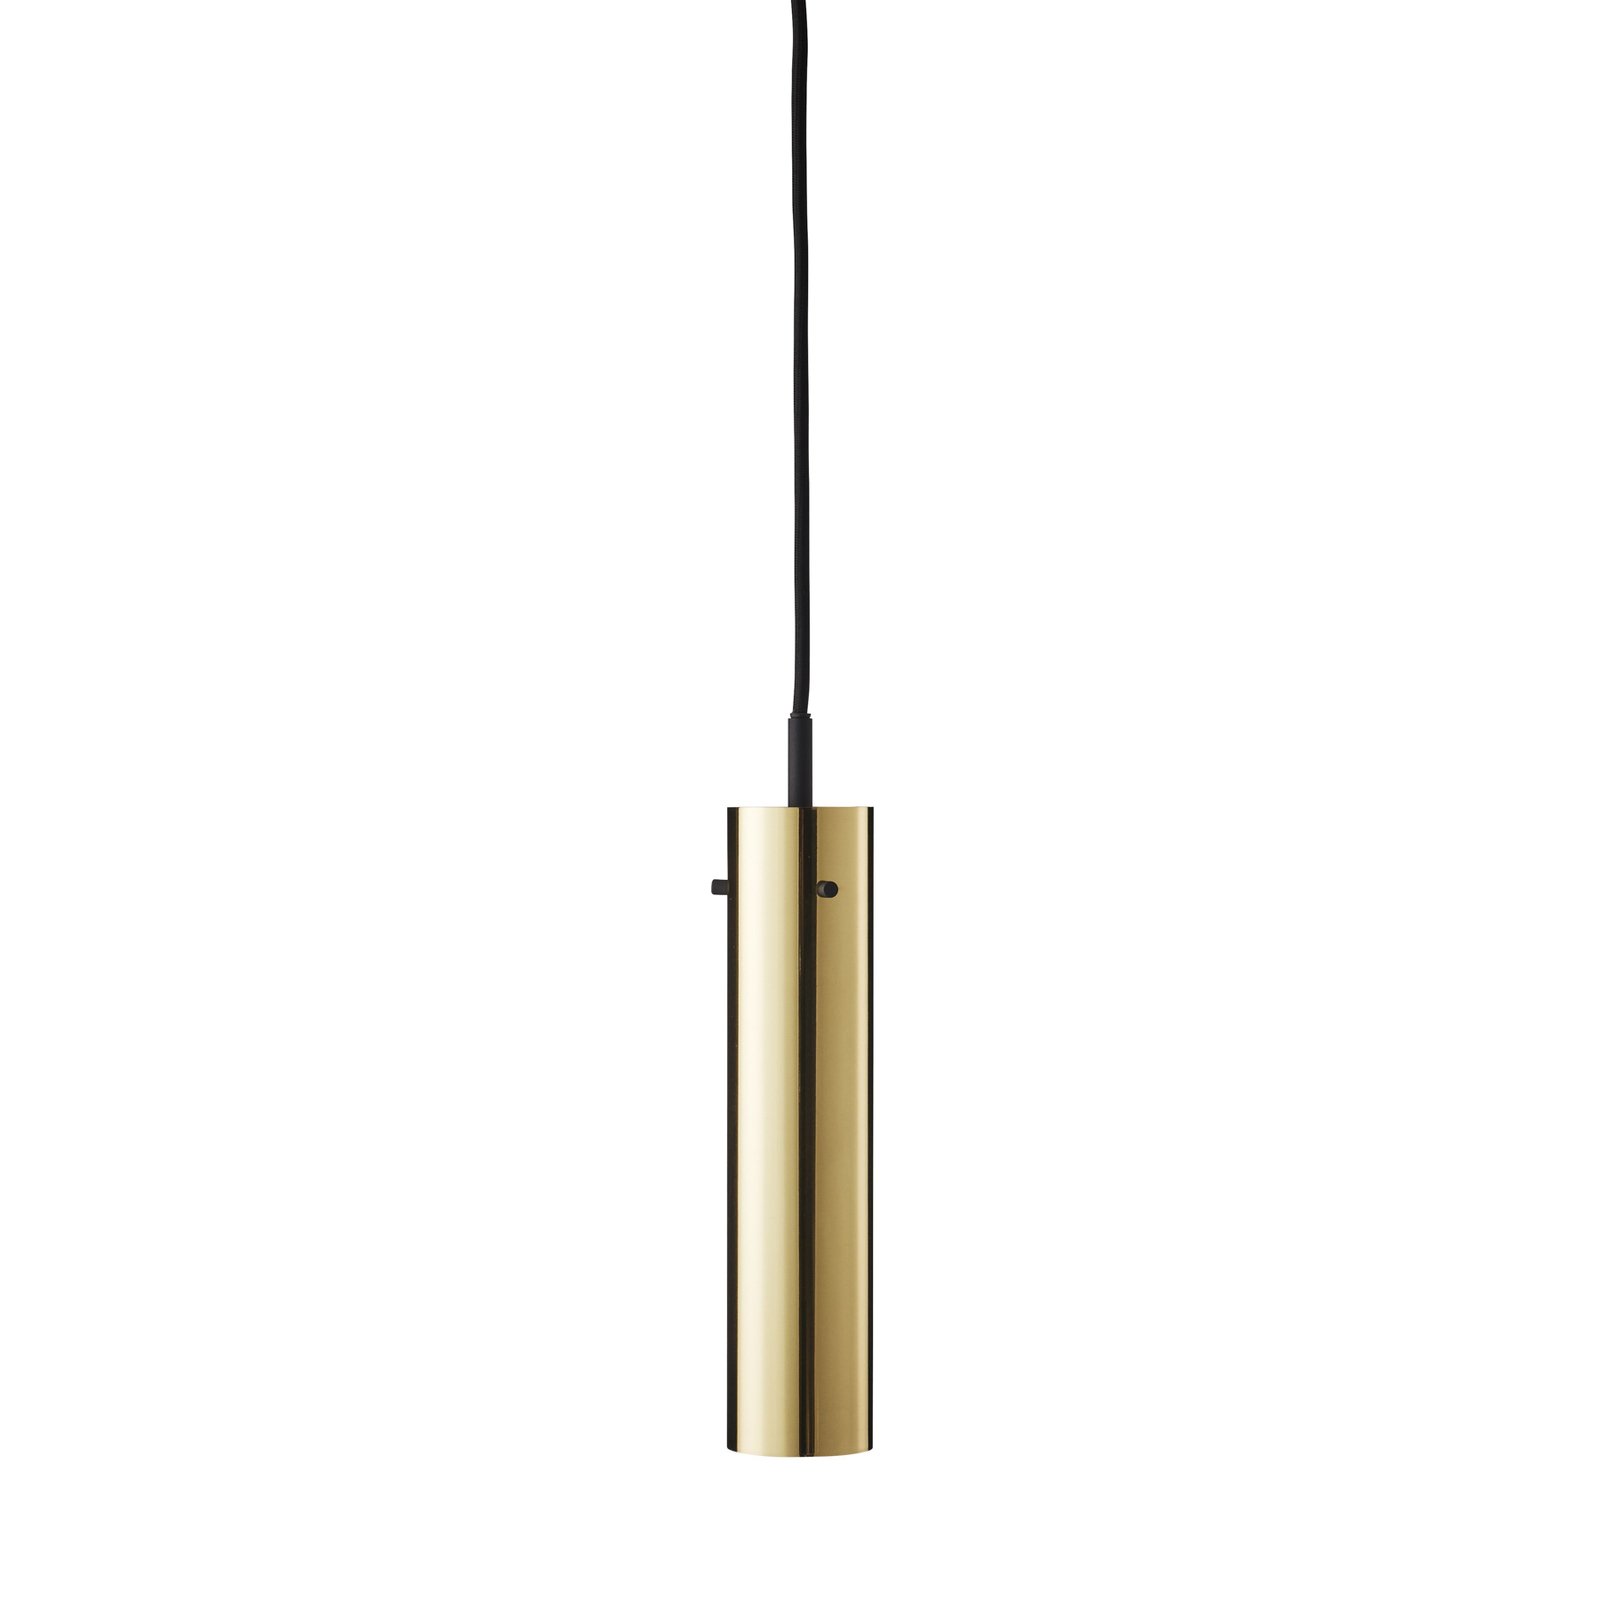 FRANDSEN viseća svjetiljka FM2014, mesing, sjajna, visina 24 cm